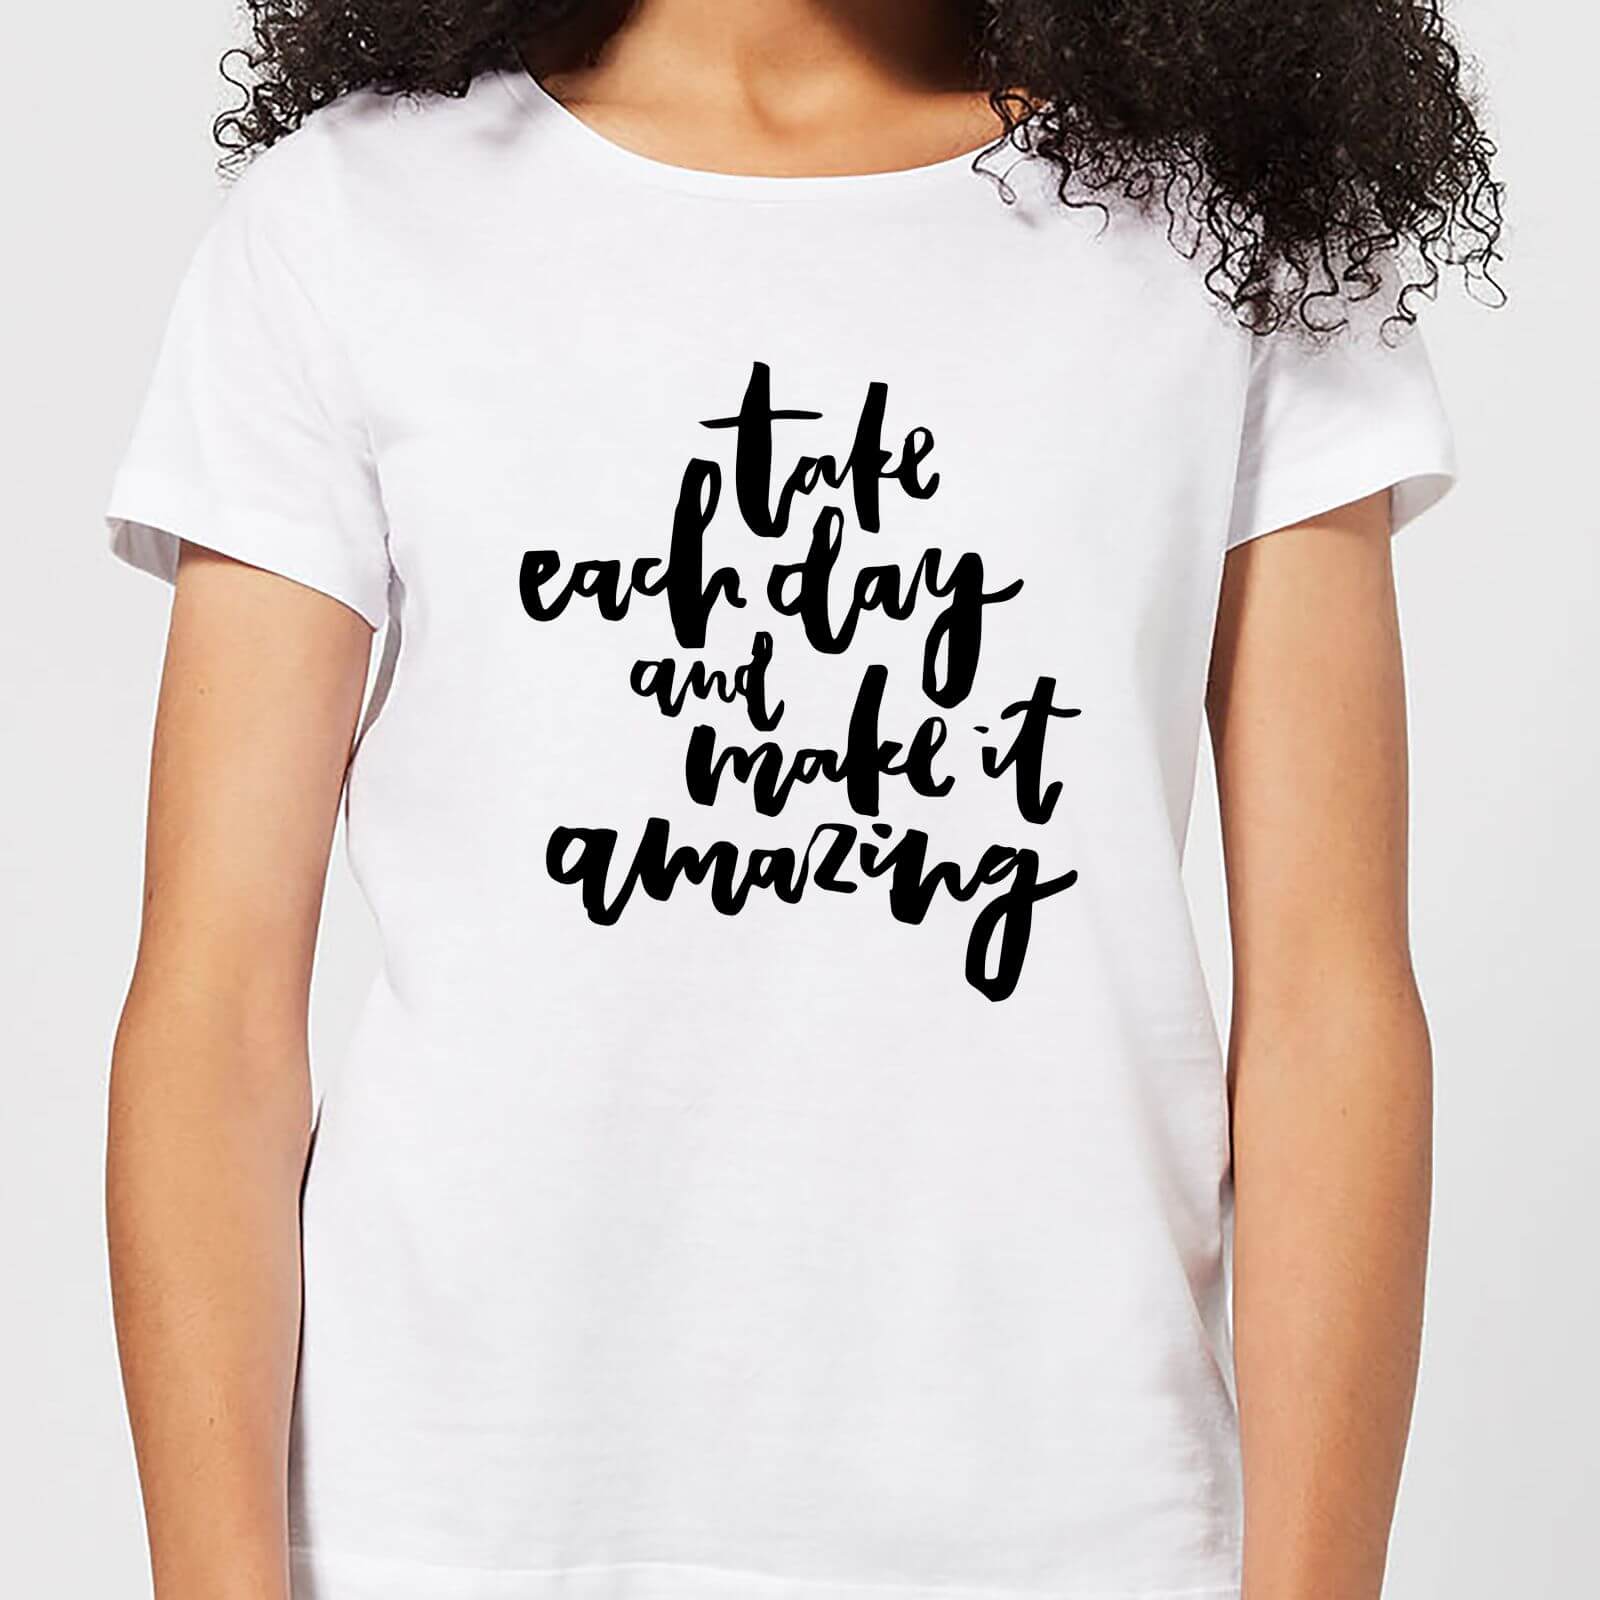 Take Each Day and Make It Amazing Women's T-Shirt - White - S - White